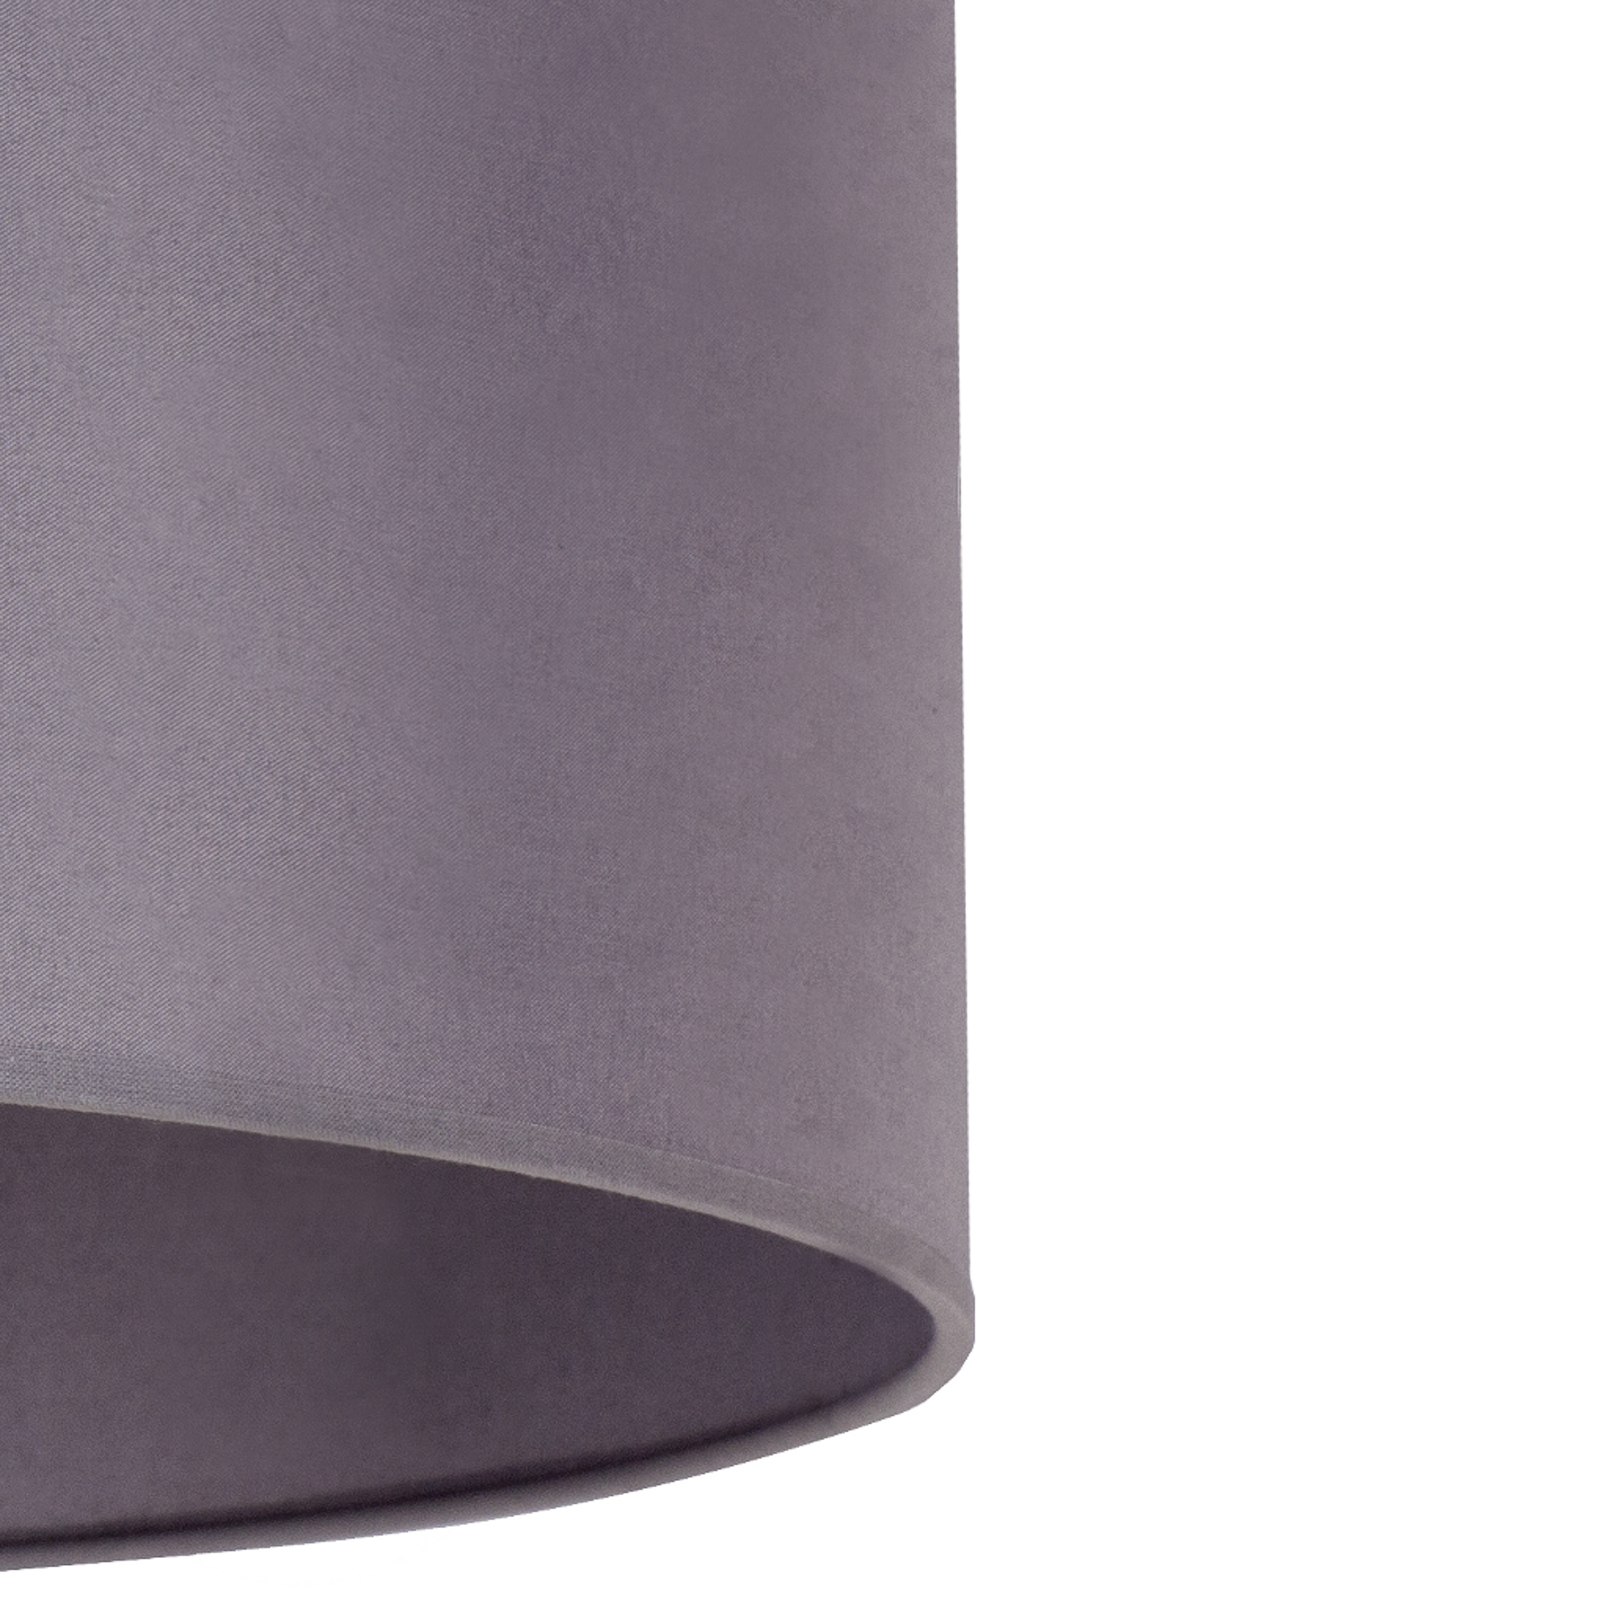 Roller lampshade Ø 50 cm, grey